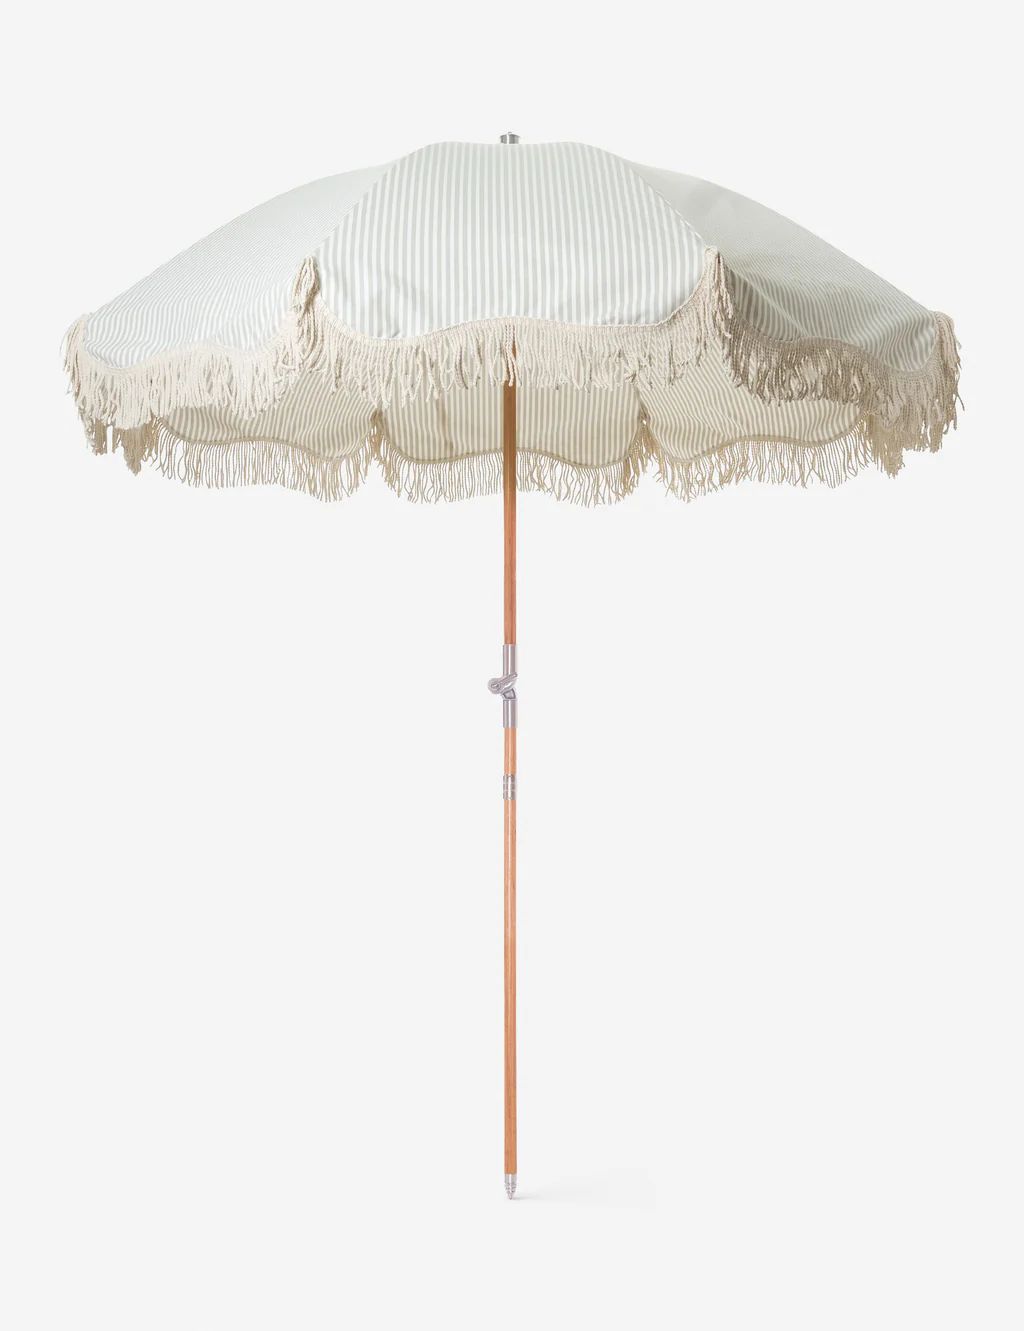 Premium Beach Umbrella | Lulu and Georgia 